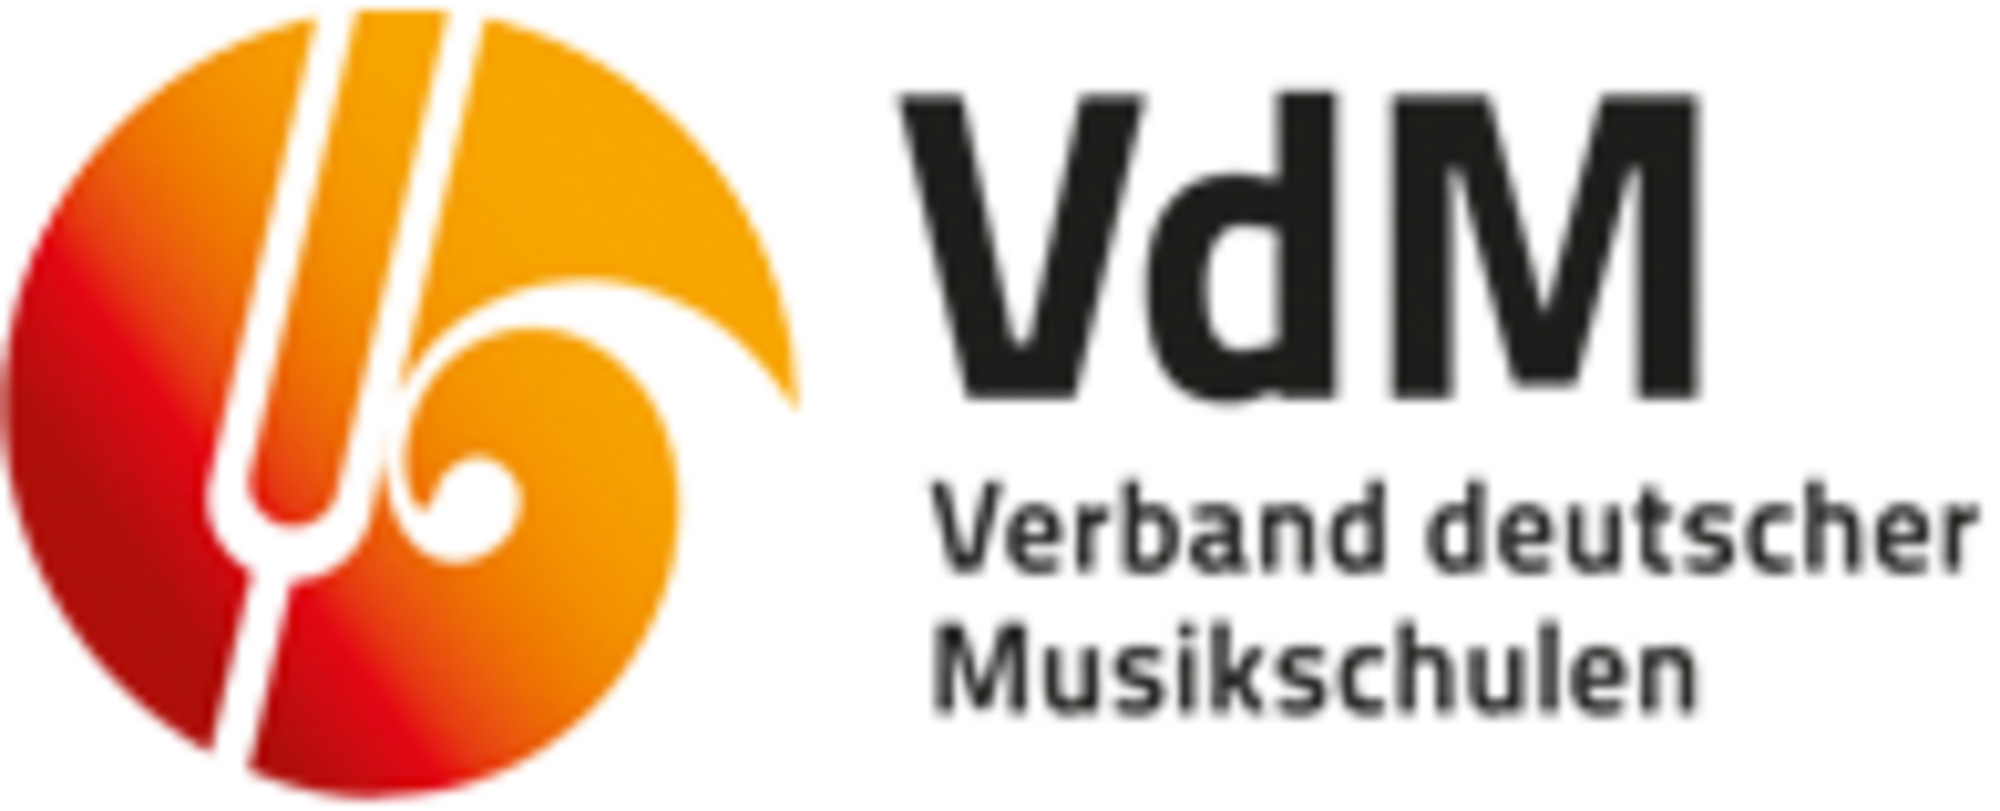 Logo Verband deutscher Musikschulen